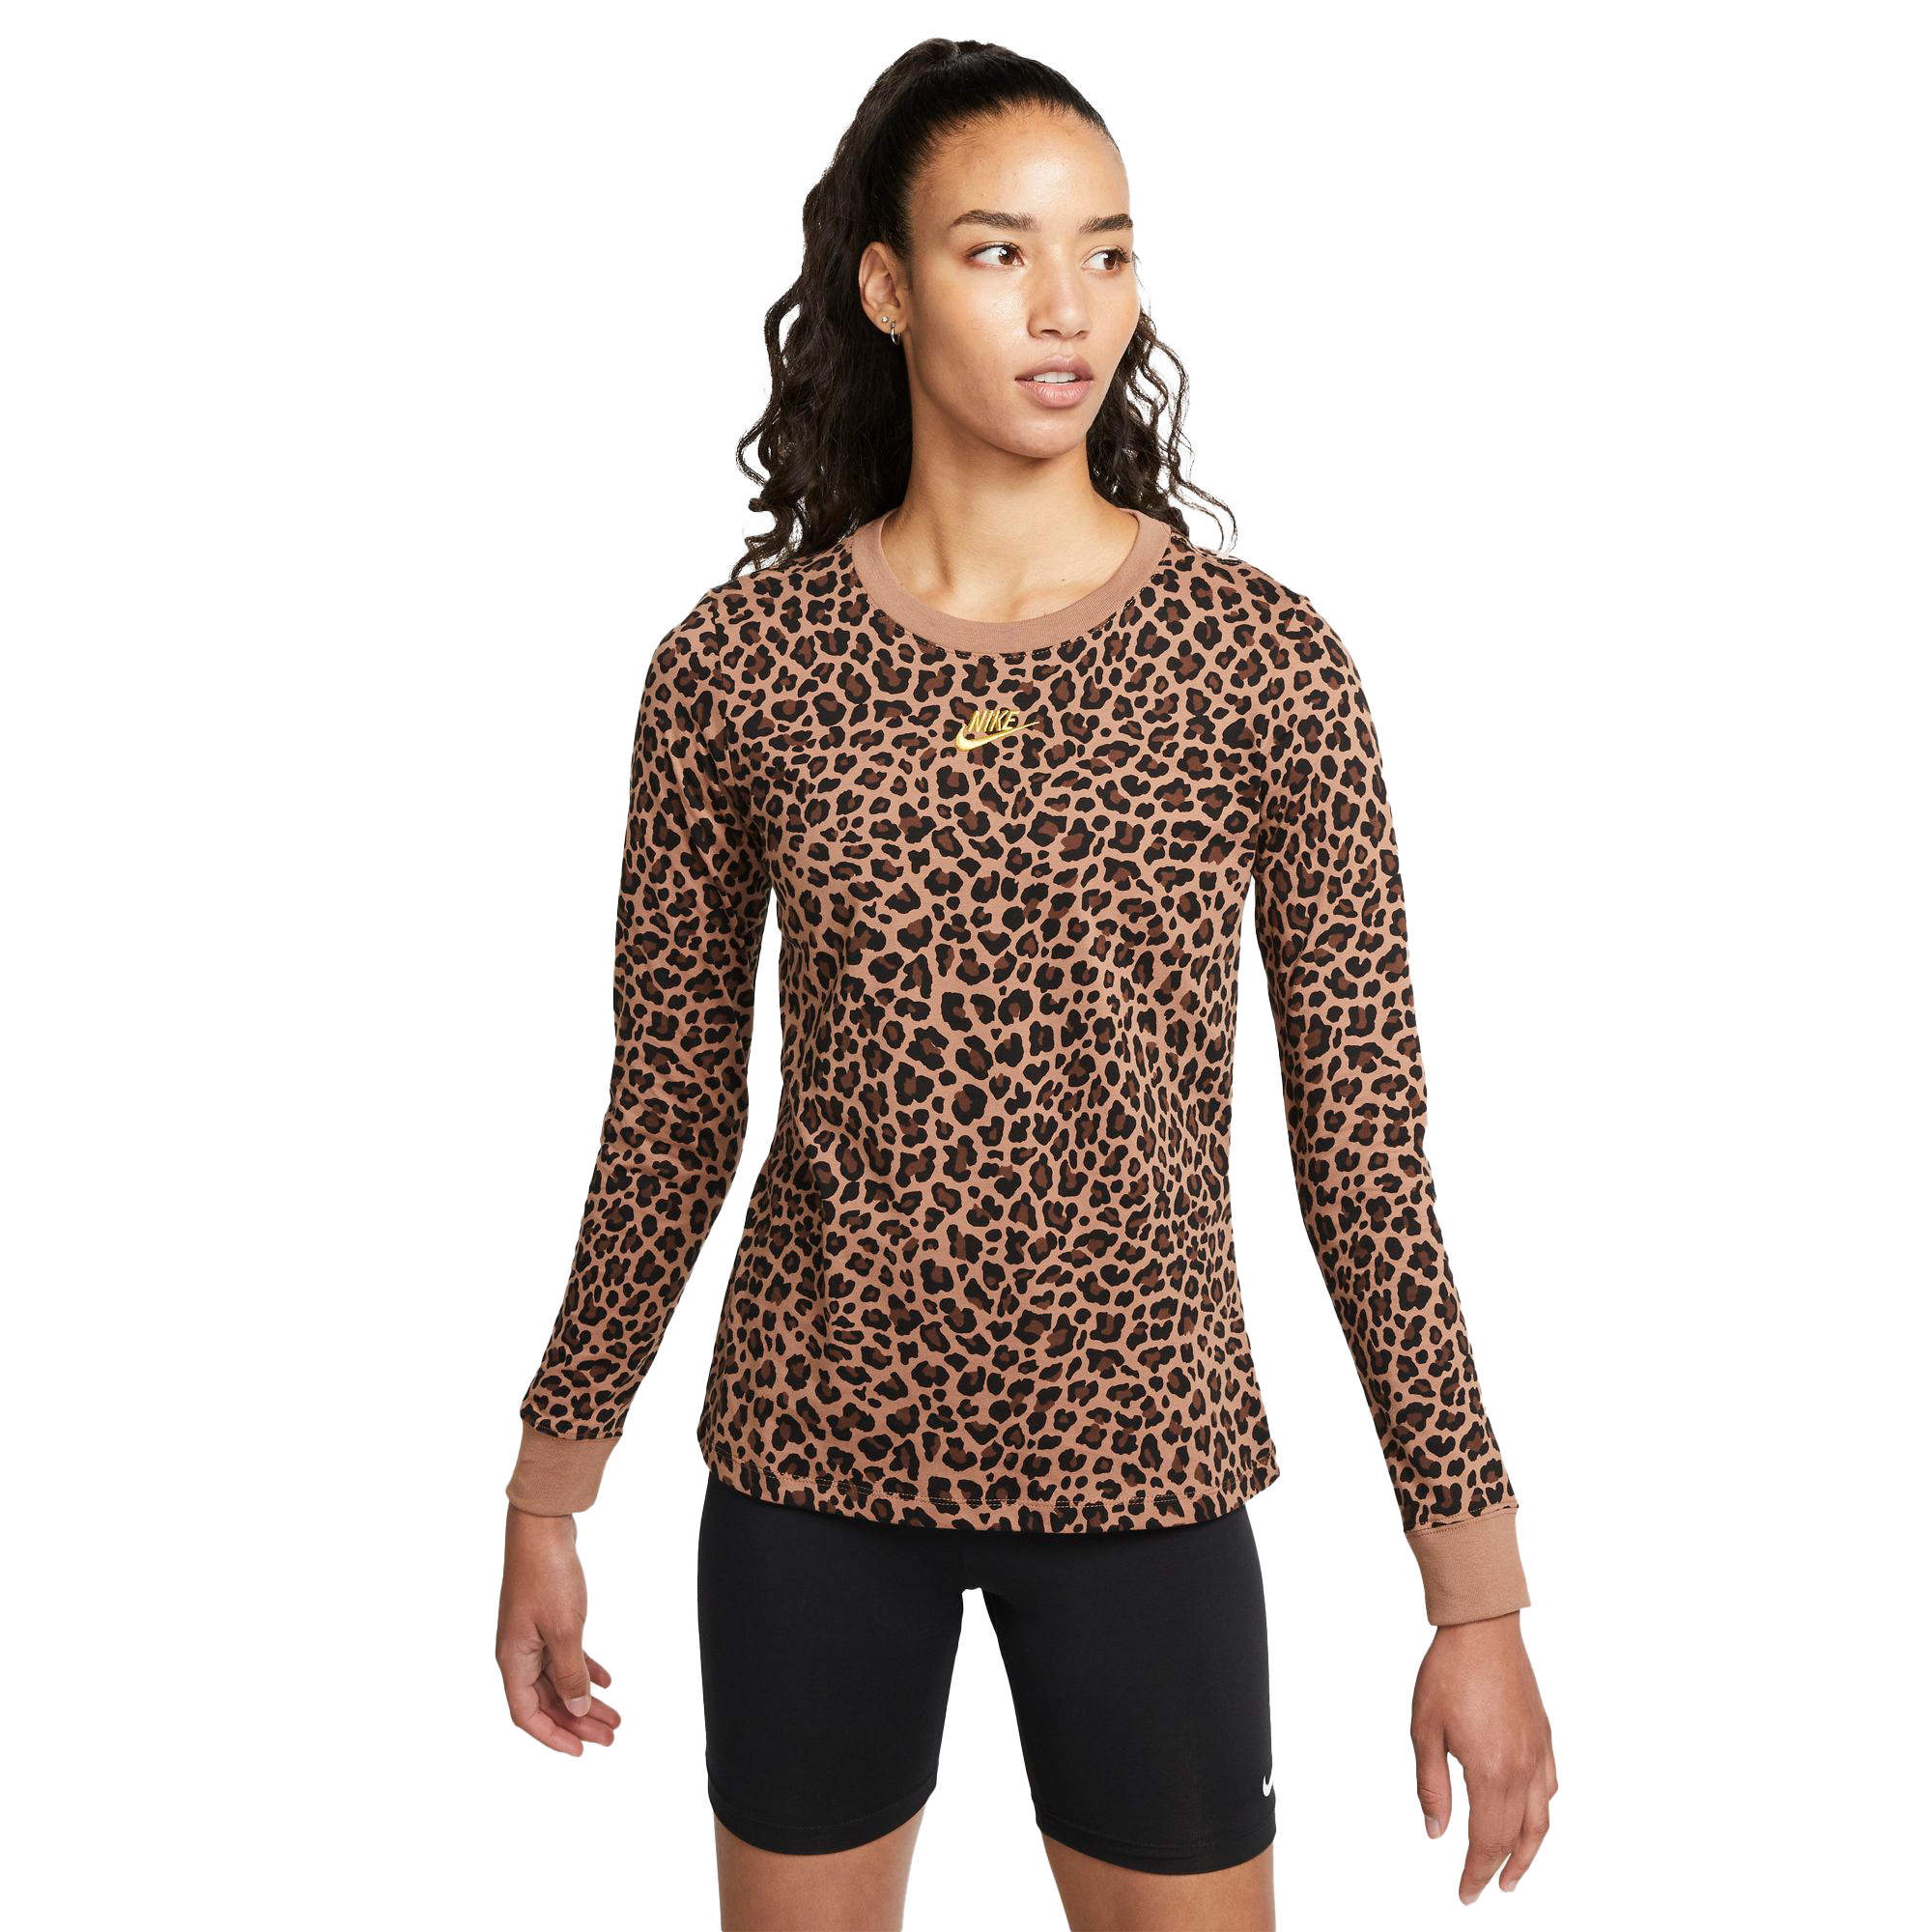 Nike Women's Sportswear Cheetah Print